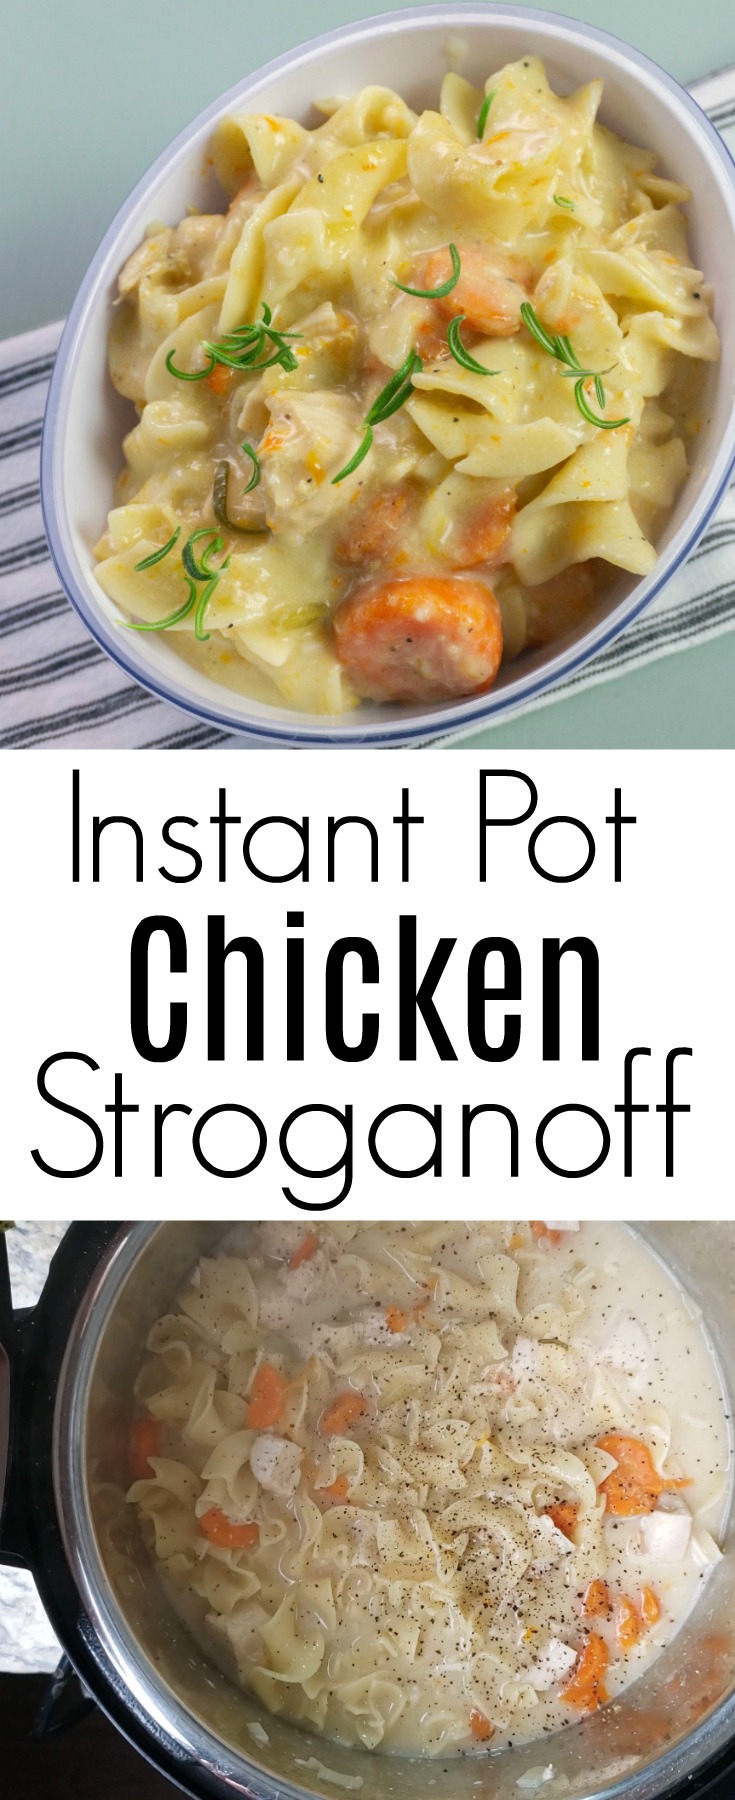 Instant Pot Chicken Strogranoff